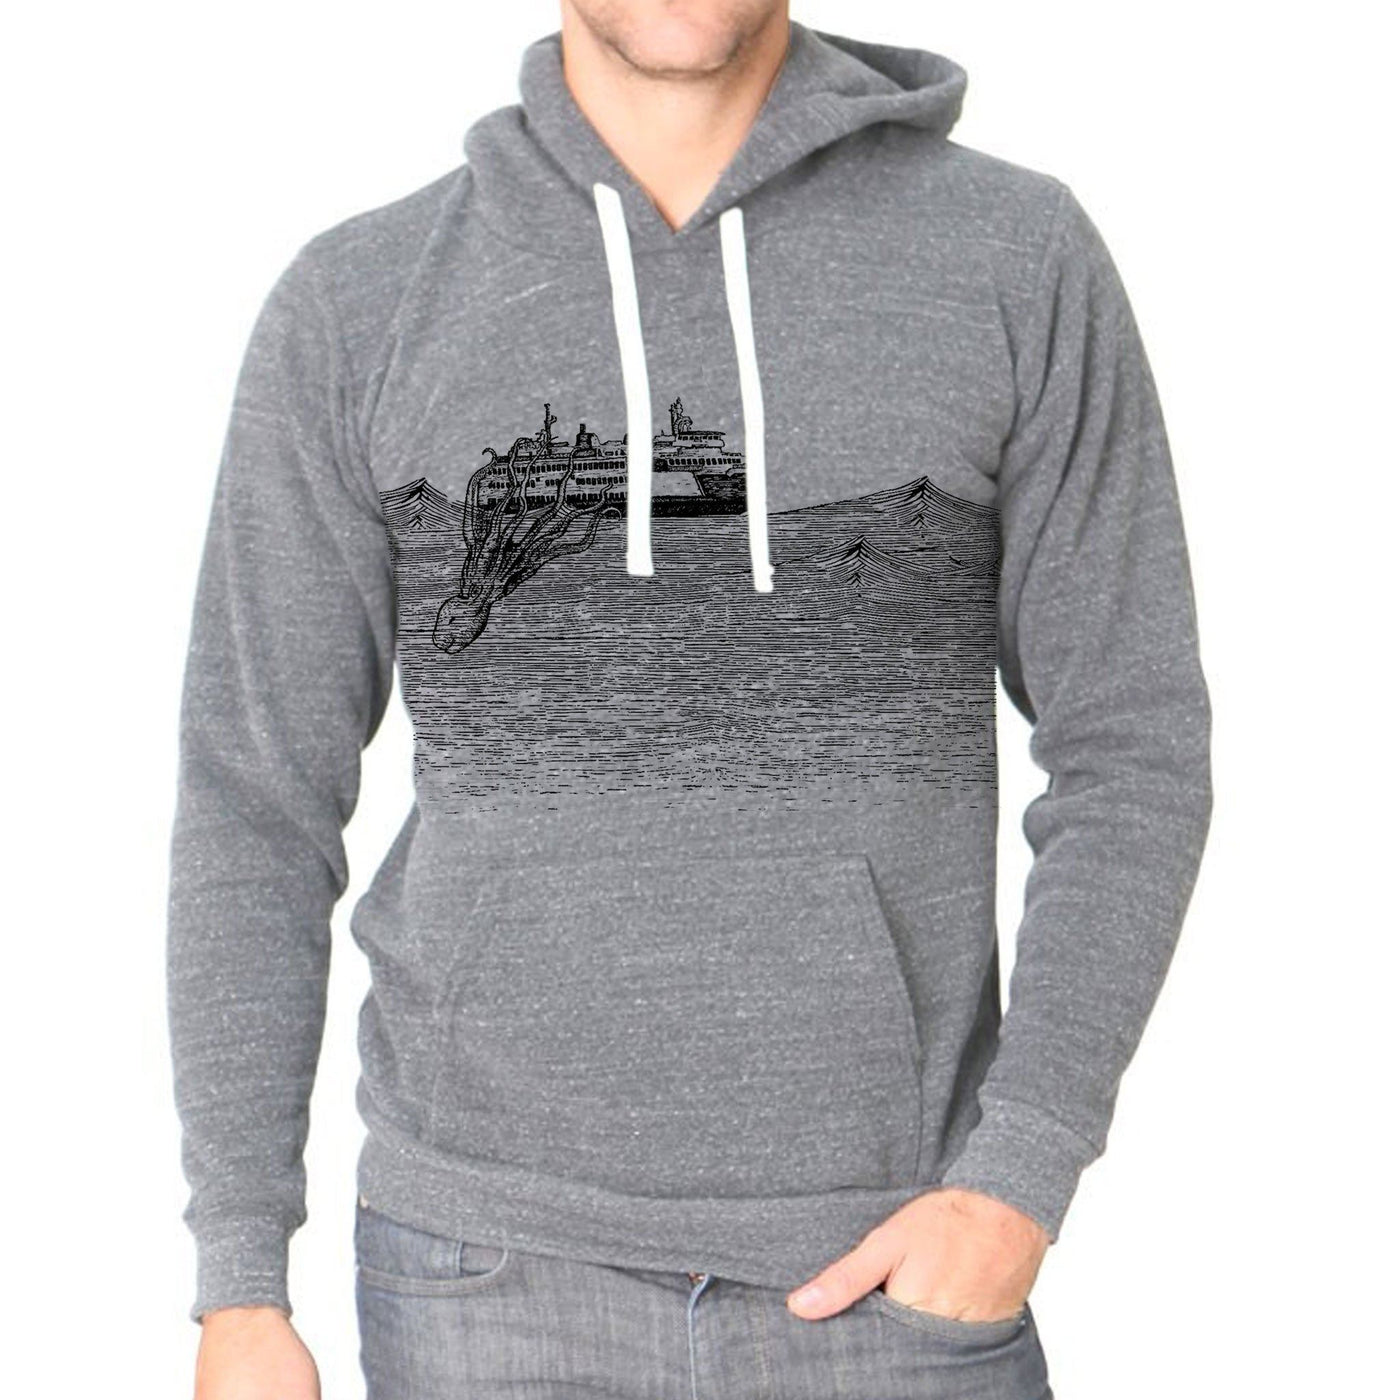 Kraken - Unisex triblend fleece hoodie (Vintage grey) Sweatshirt Printshop Northwest 